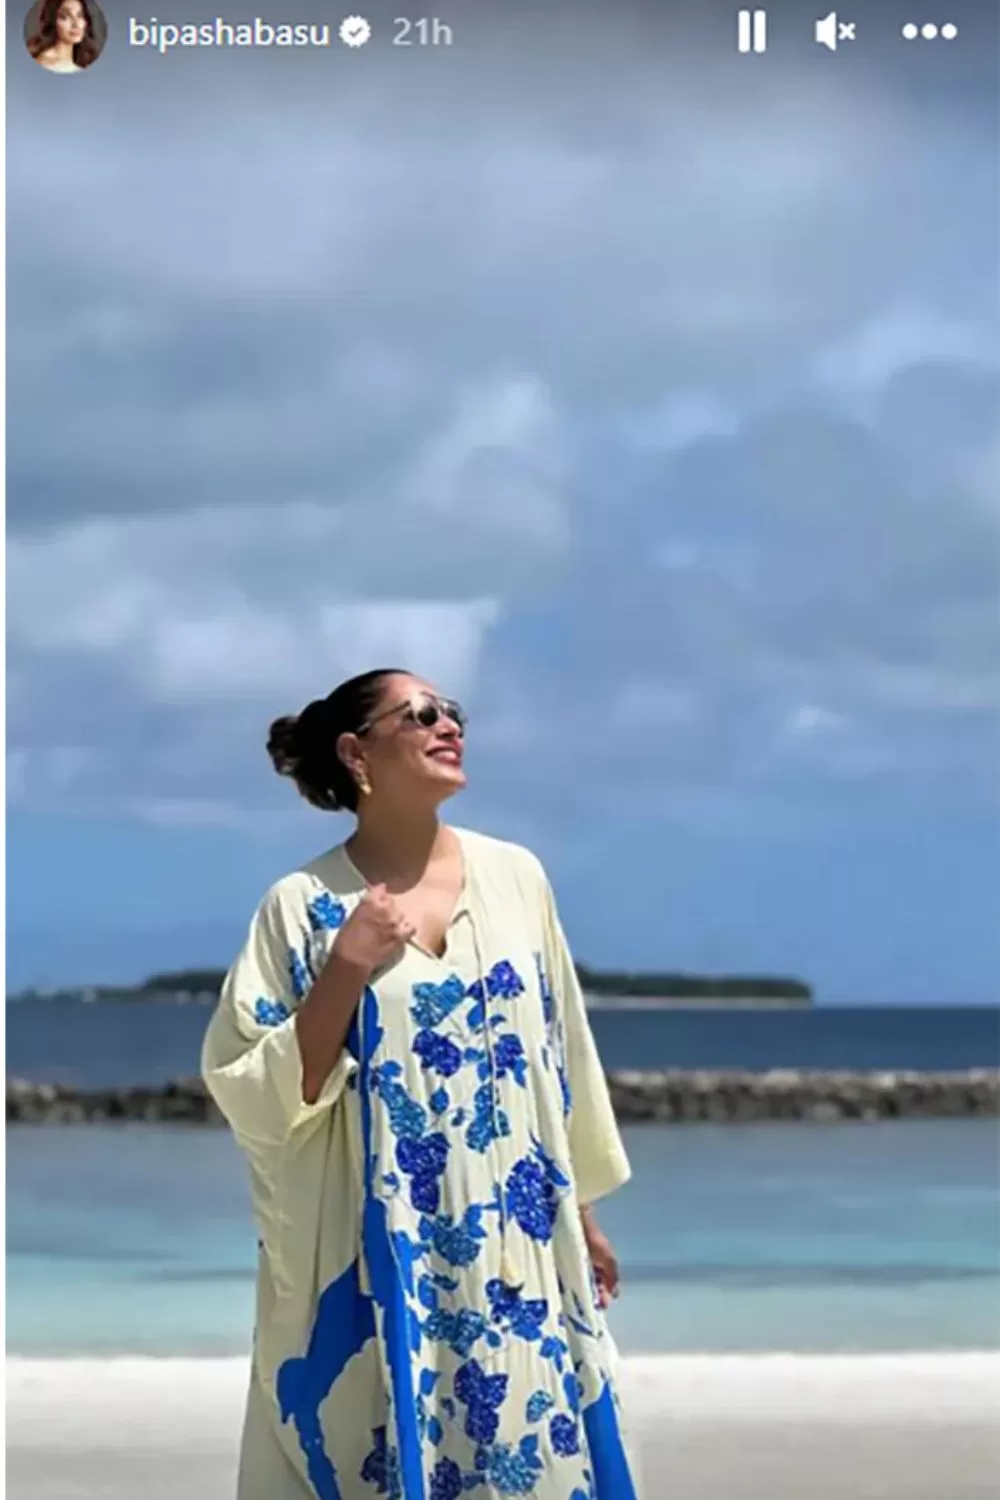 Bipasha Basu and Karan Singh Grover's Blissful Maldives Vacation: Sun, Sea, and Floating Breakfast!